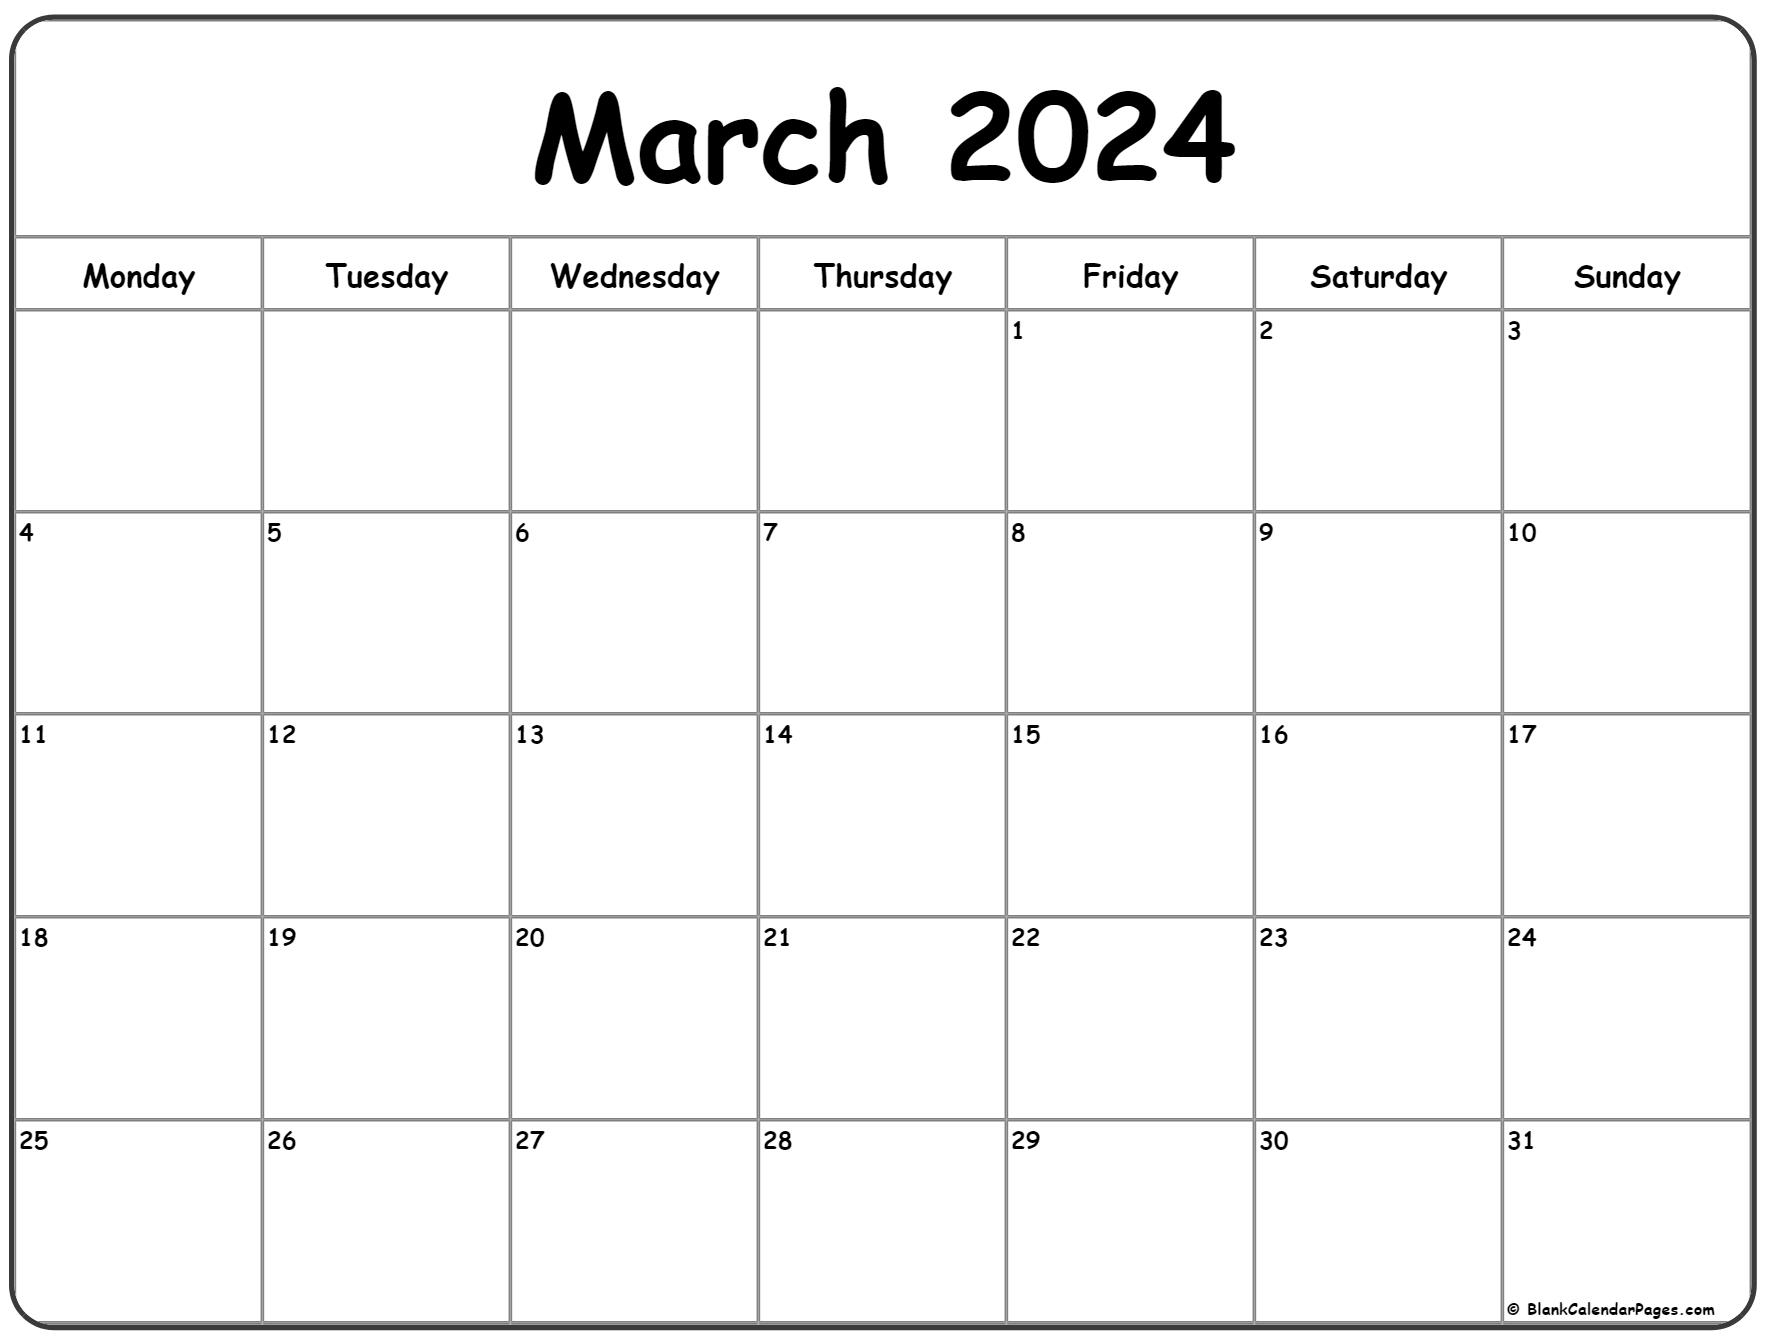 March 2024 Monday Calendar | Monday To Sunday for Calendar Printable March 2024